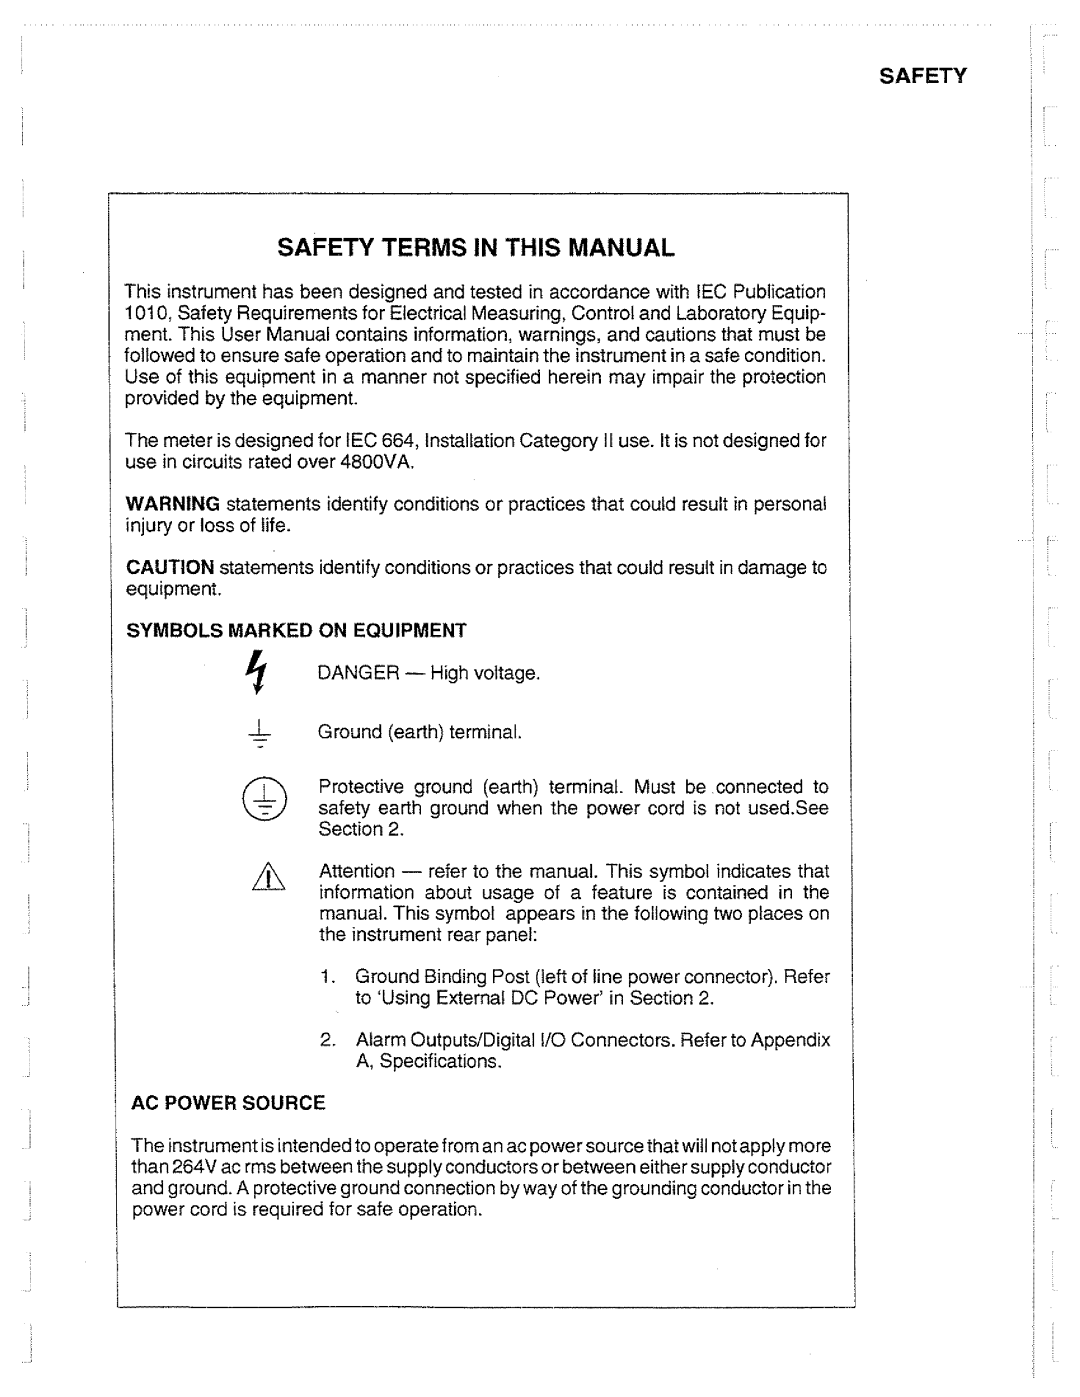 Fluke 2625A manual 